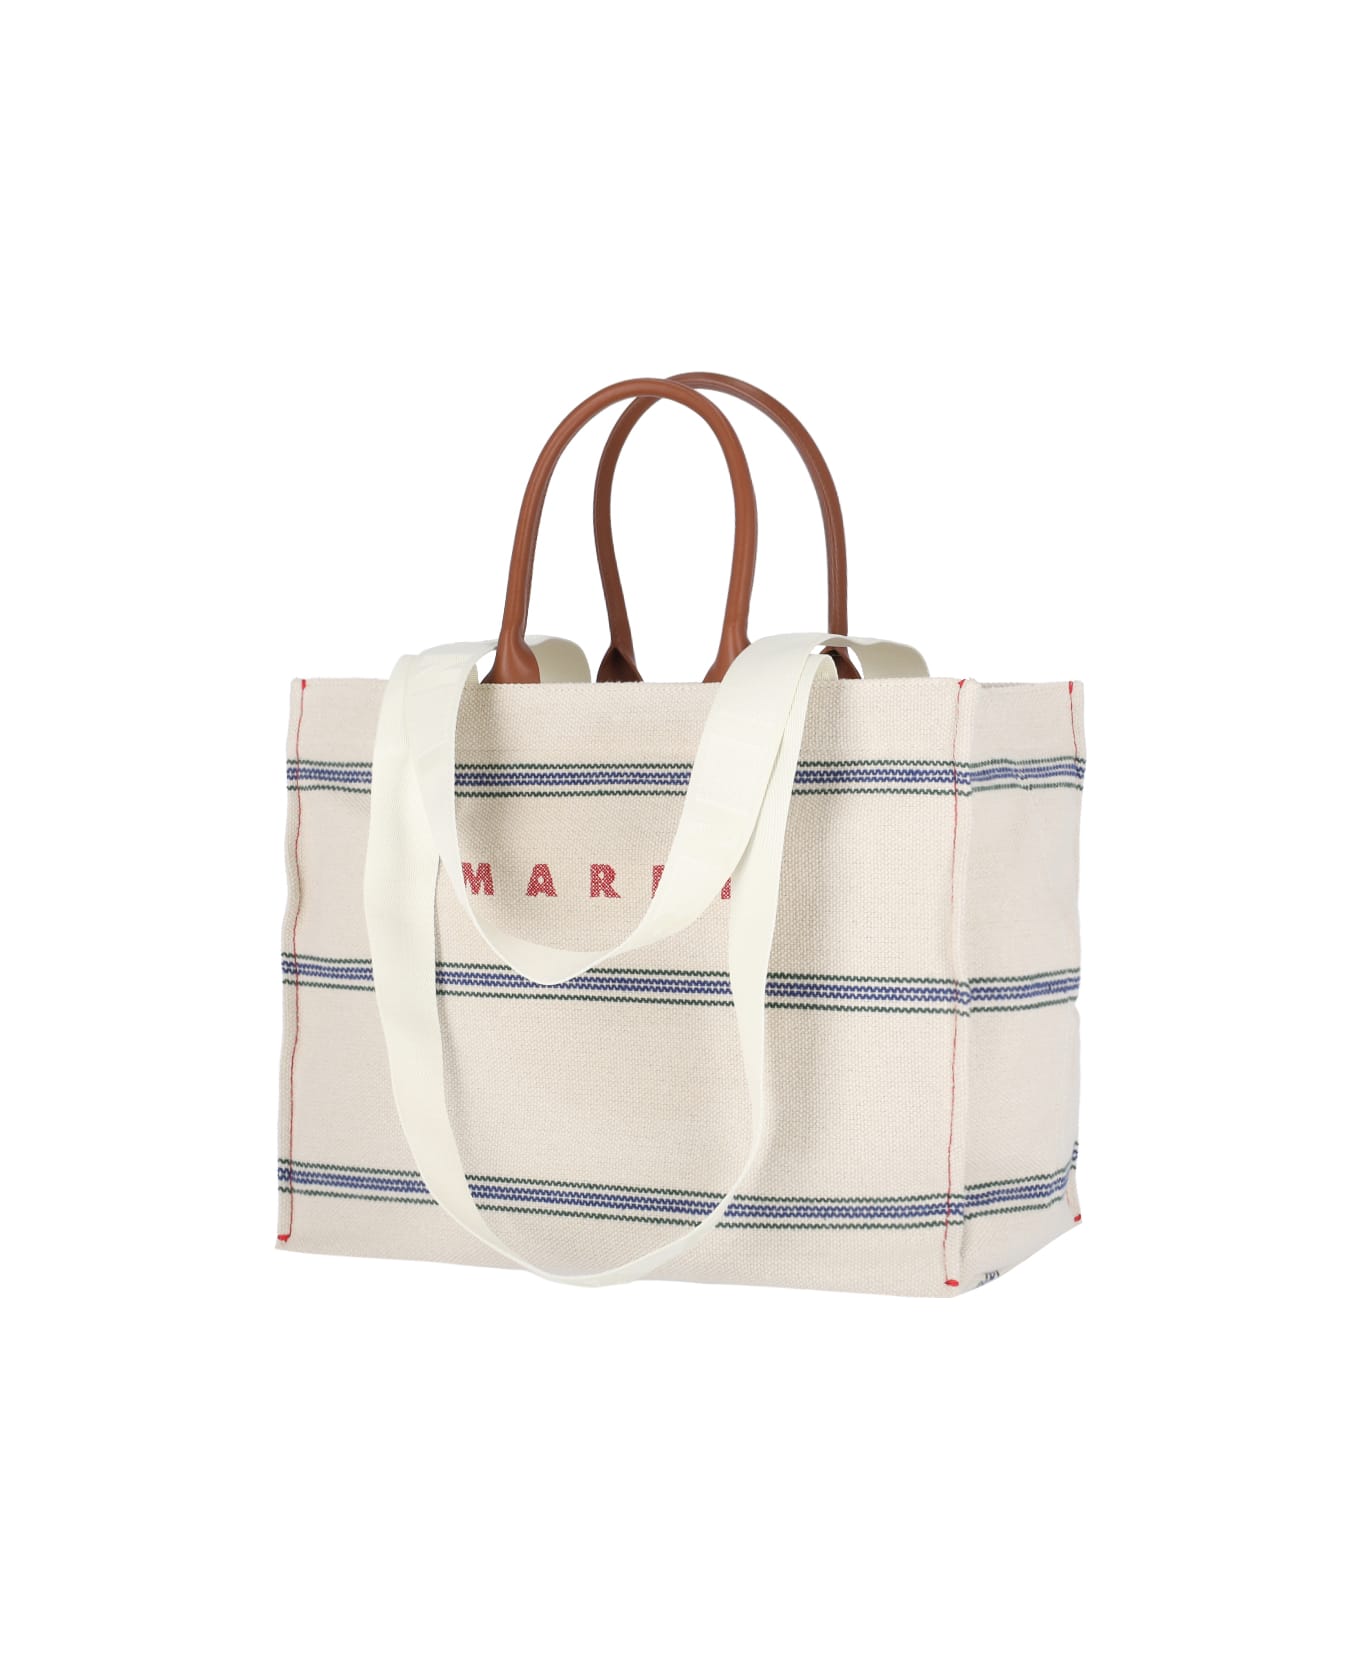 Marni Logo Tote Bag - Crema